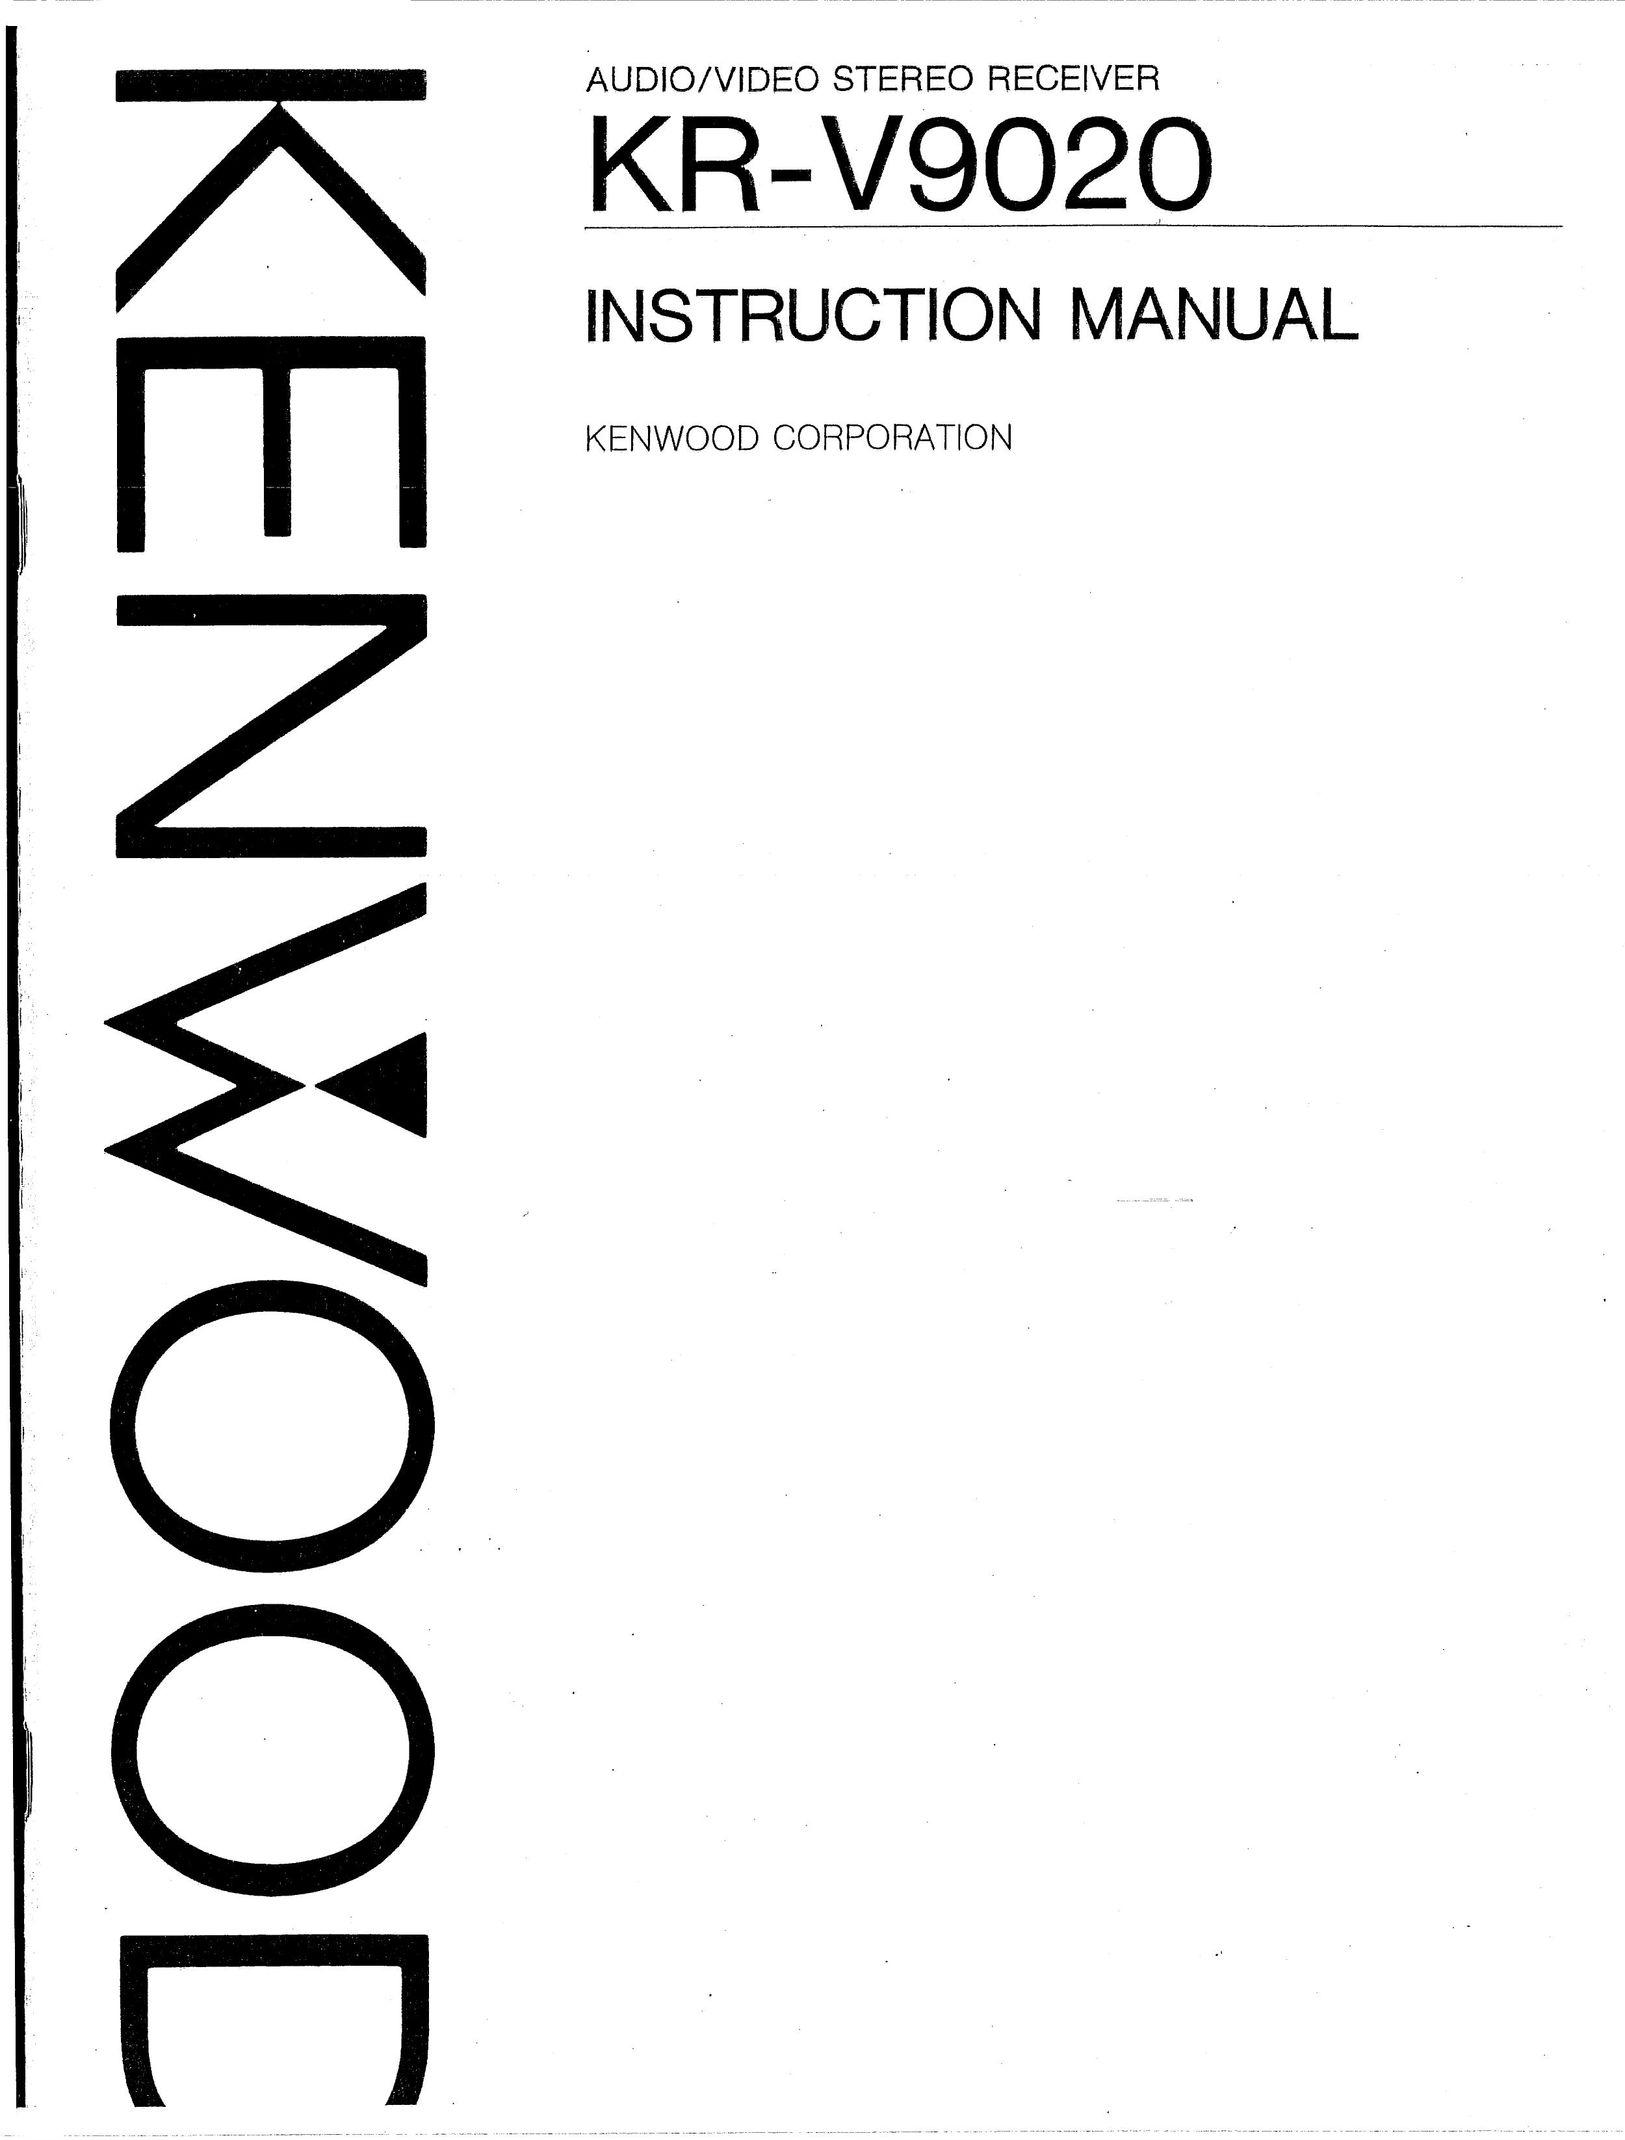 Kenwood KR-V9020 Stereo Receiver User Manual